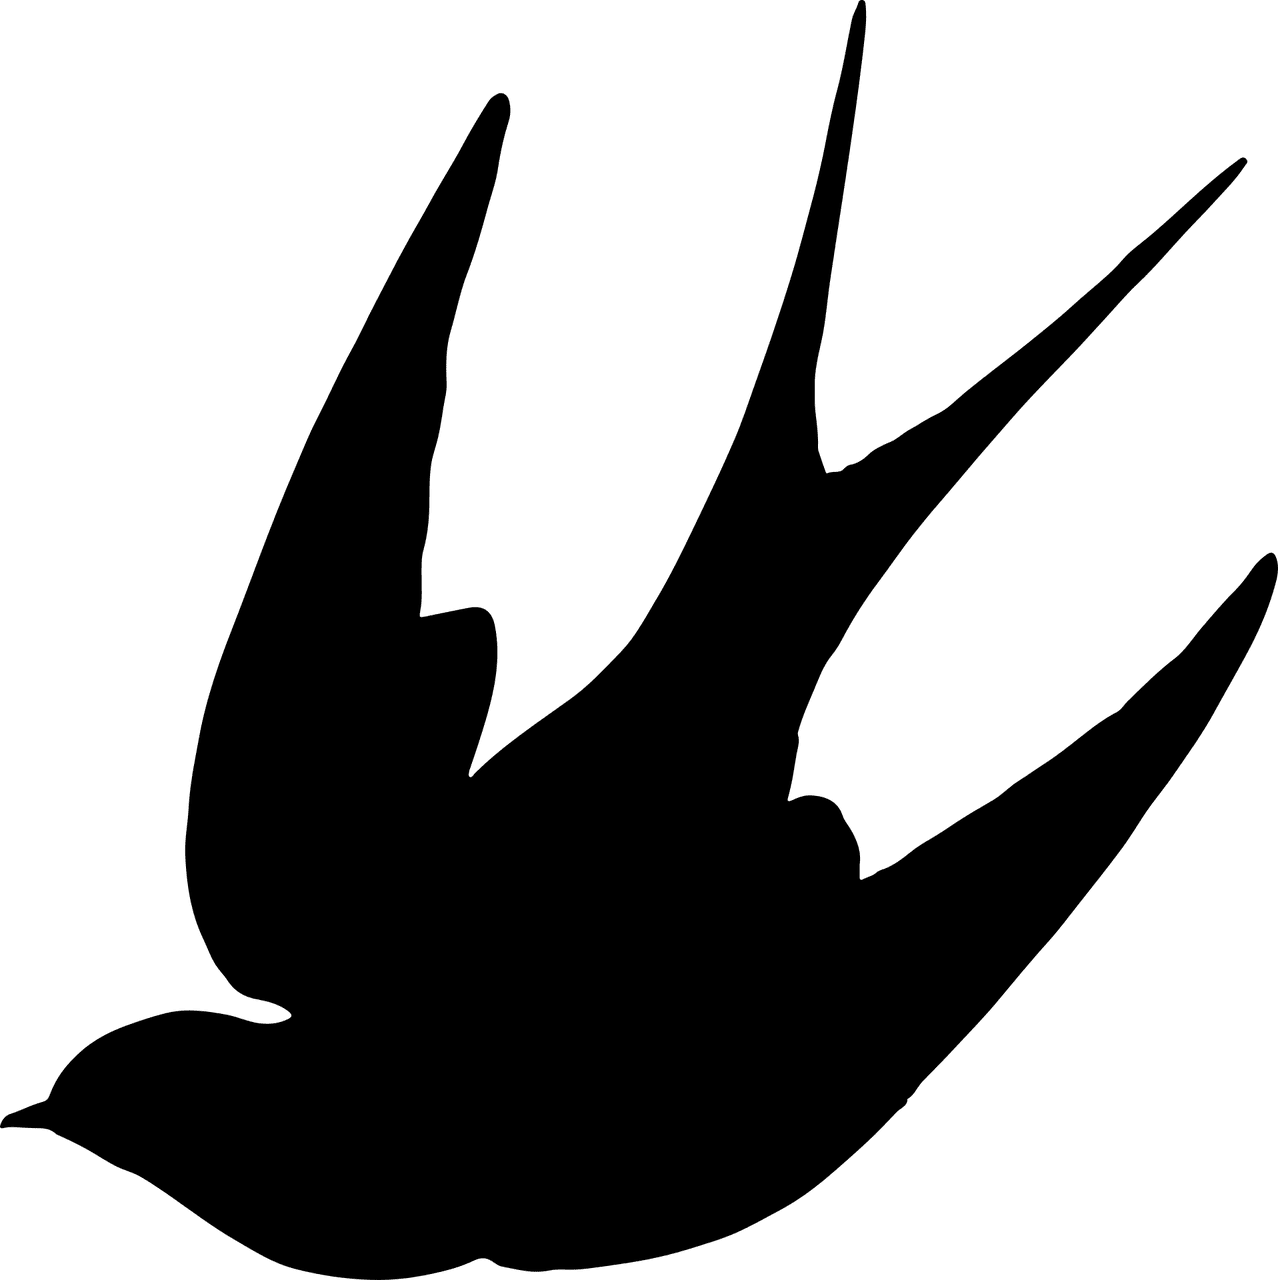 Swallow silhouette tattoo